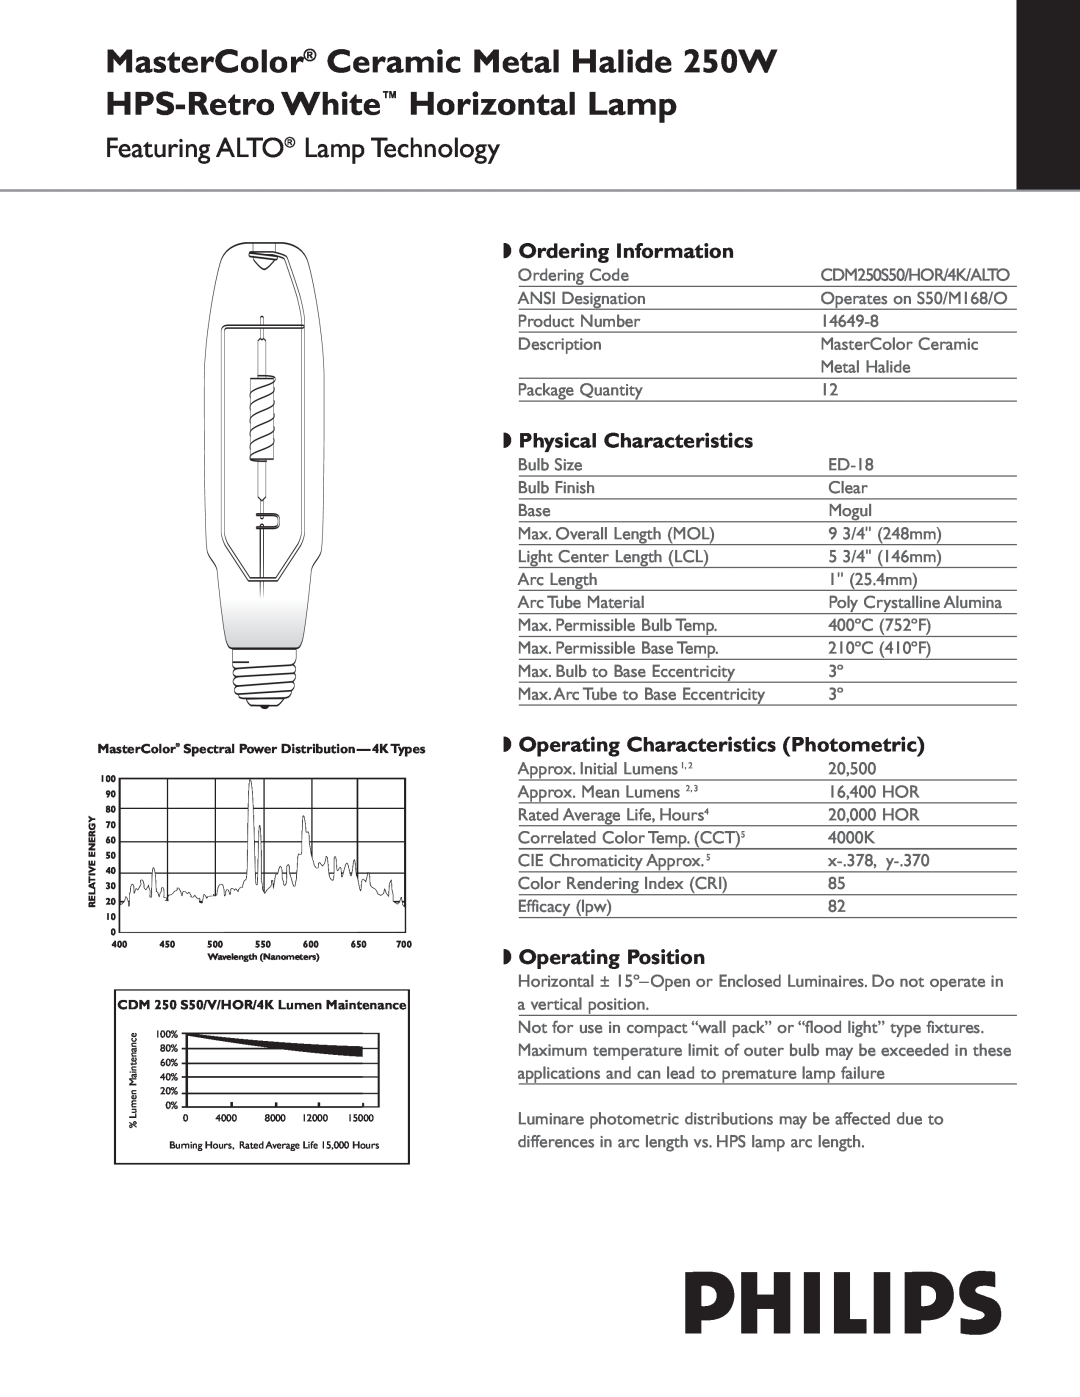 Philips 146498 manual Ordering Information, Physical Characteristics, Operating Characteristics Photometric 